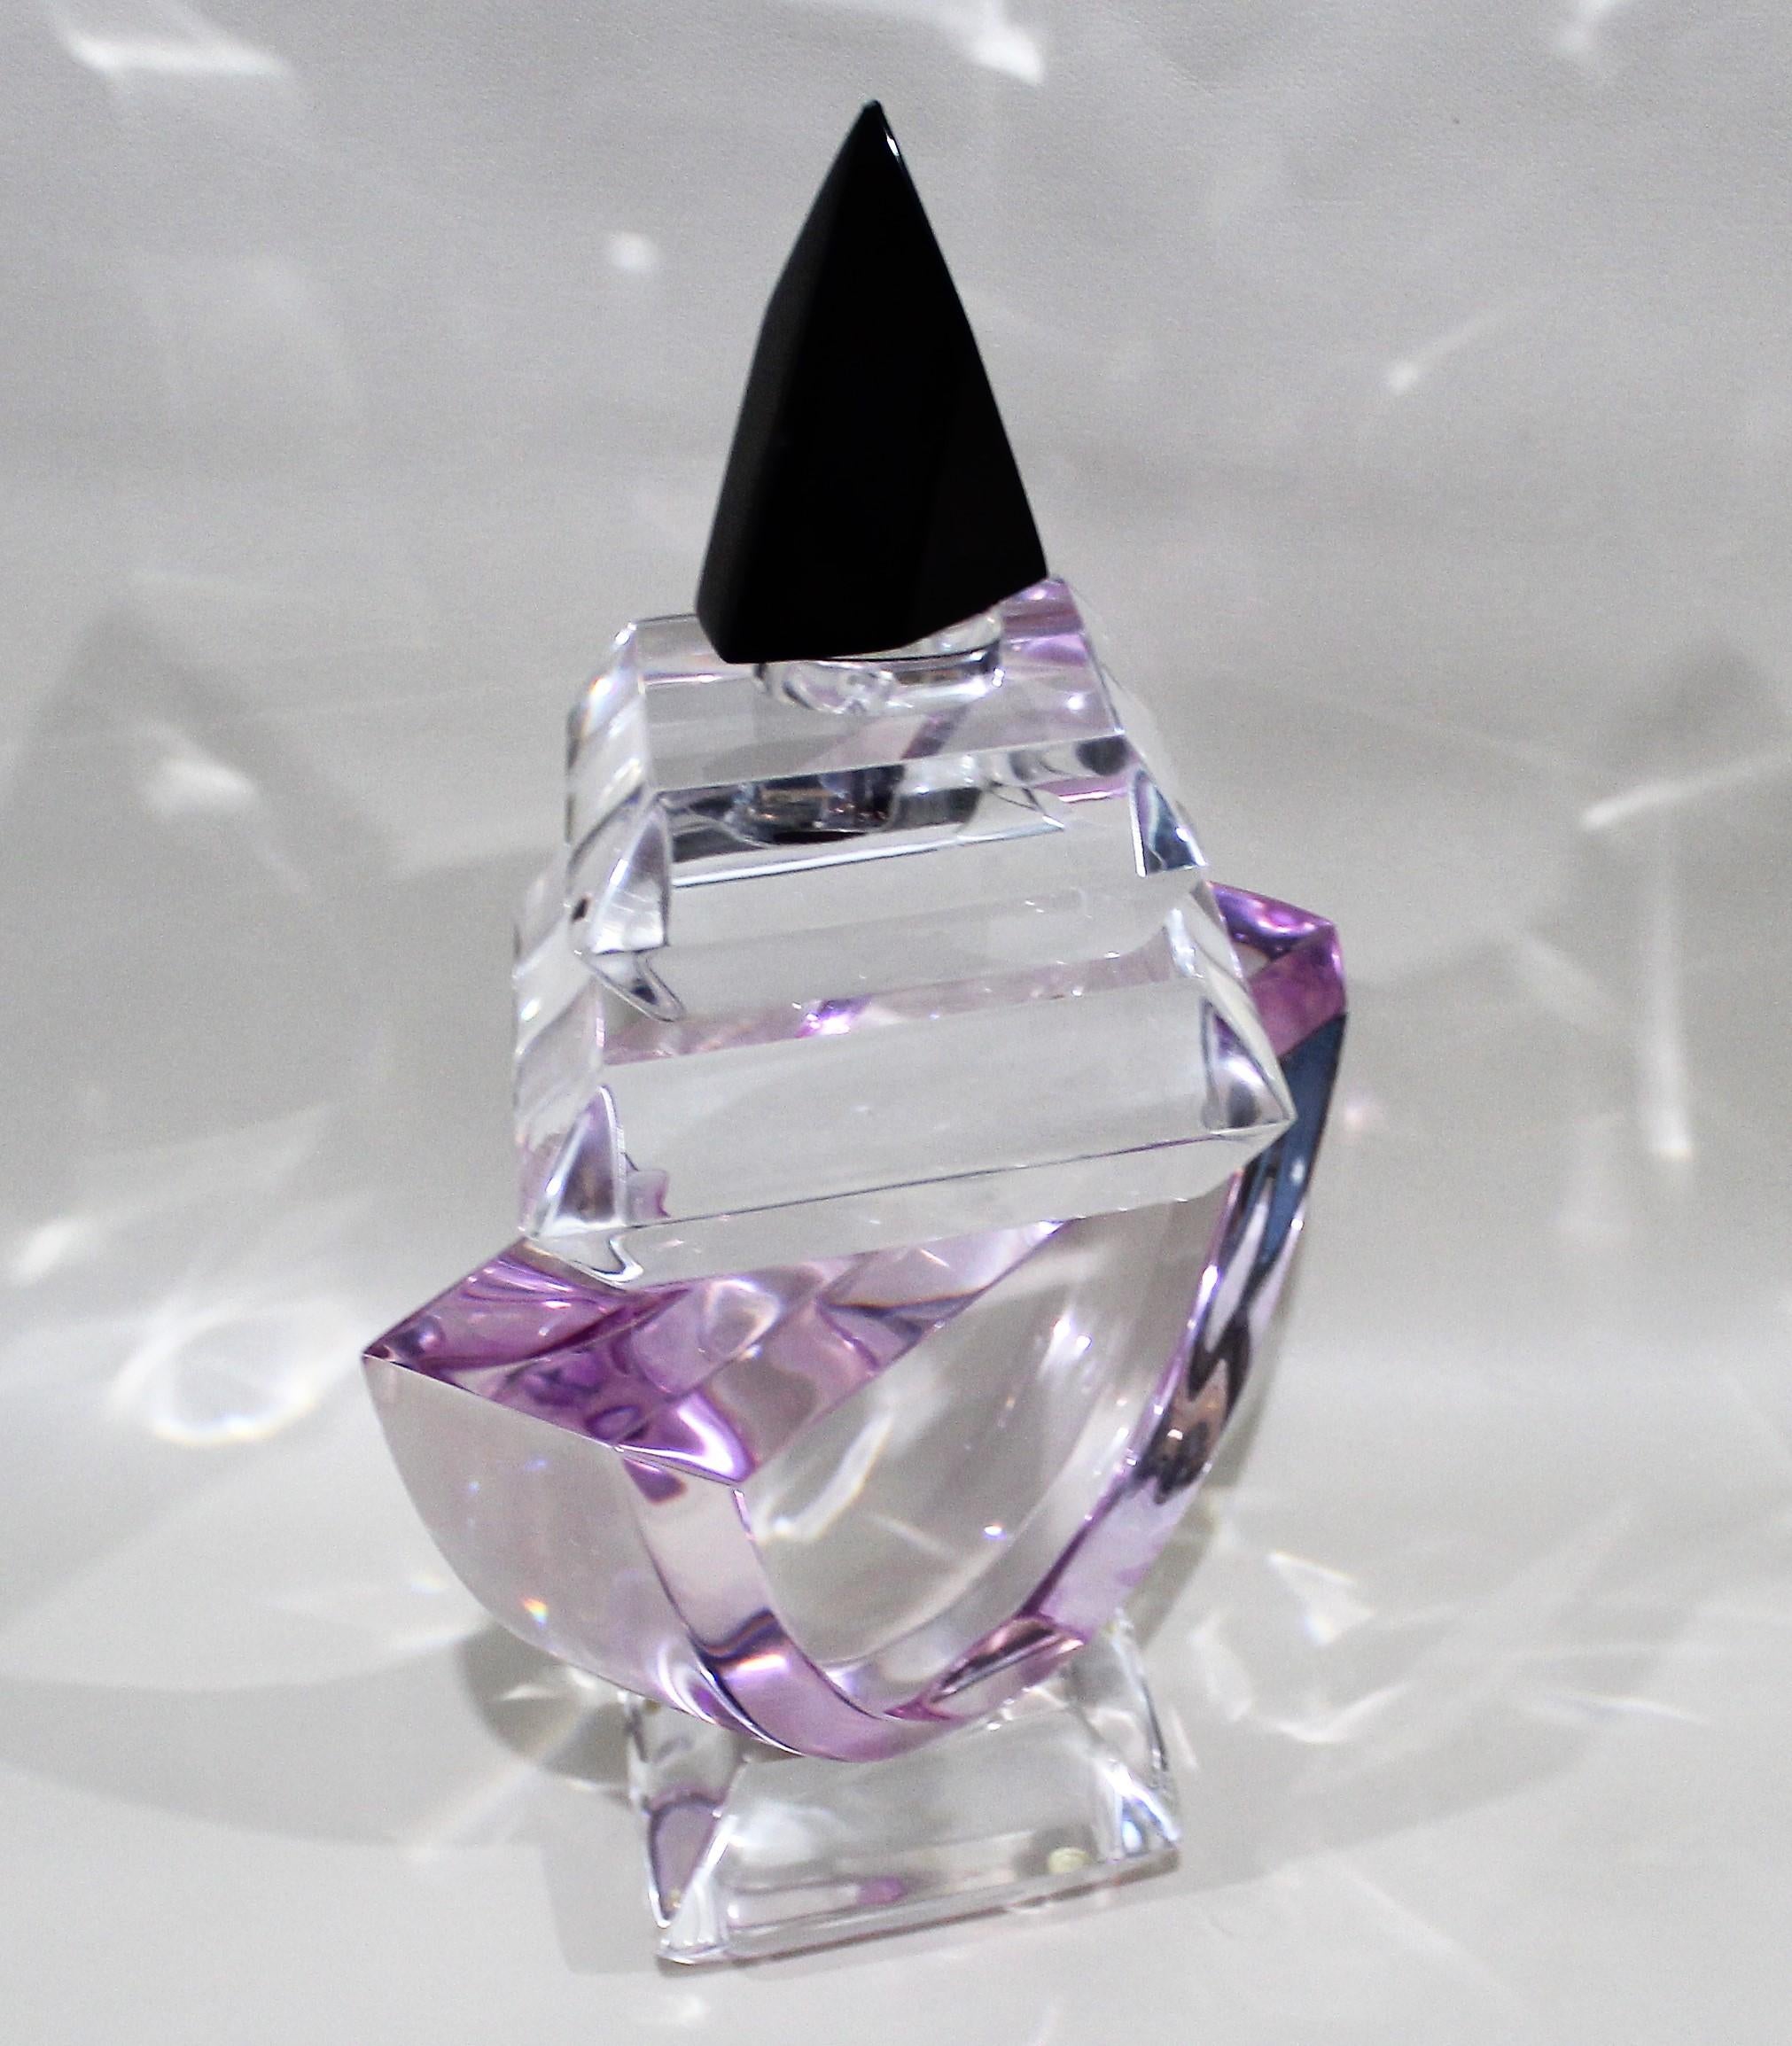 Hivo Van Teal Lucite Perfume Bottle Sculpture In Good Condition For Sale In Hamilton, Ontario